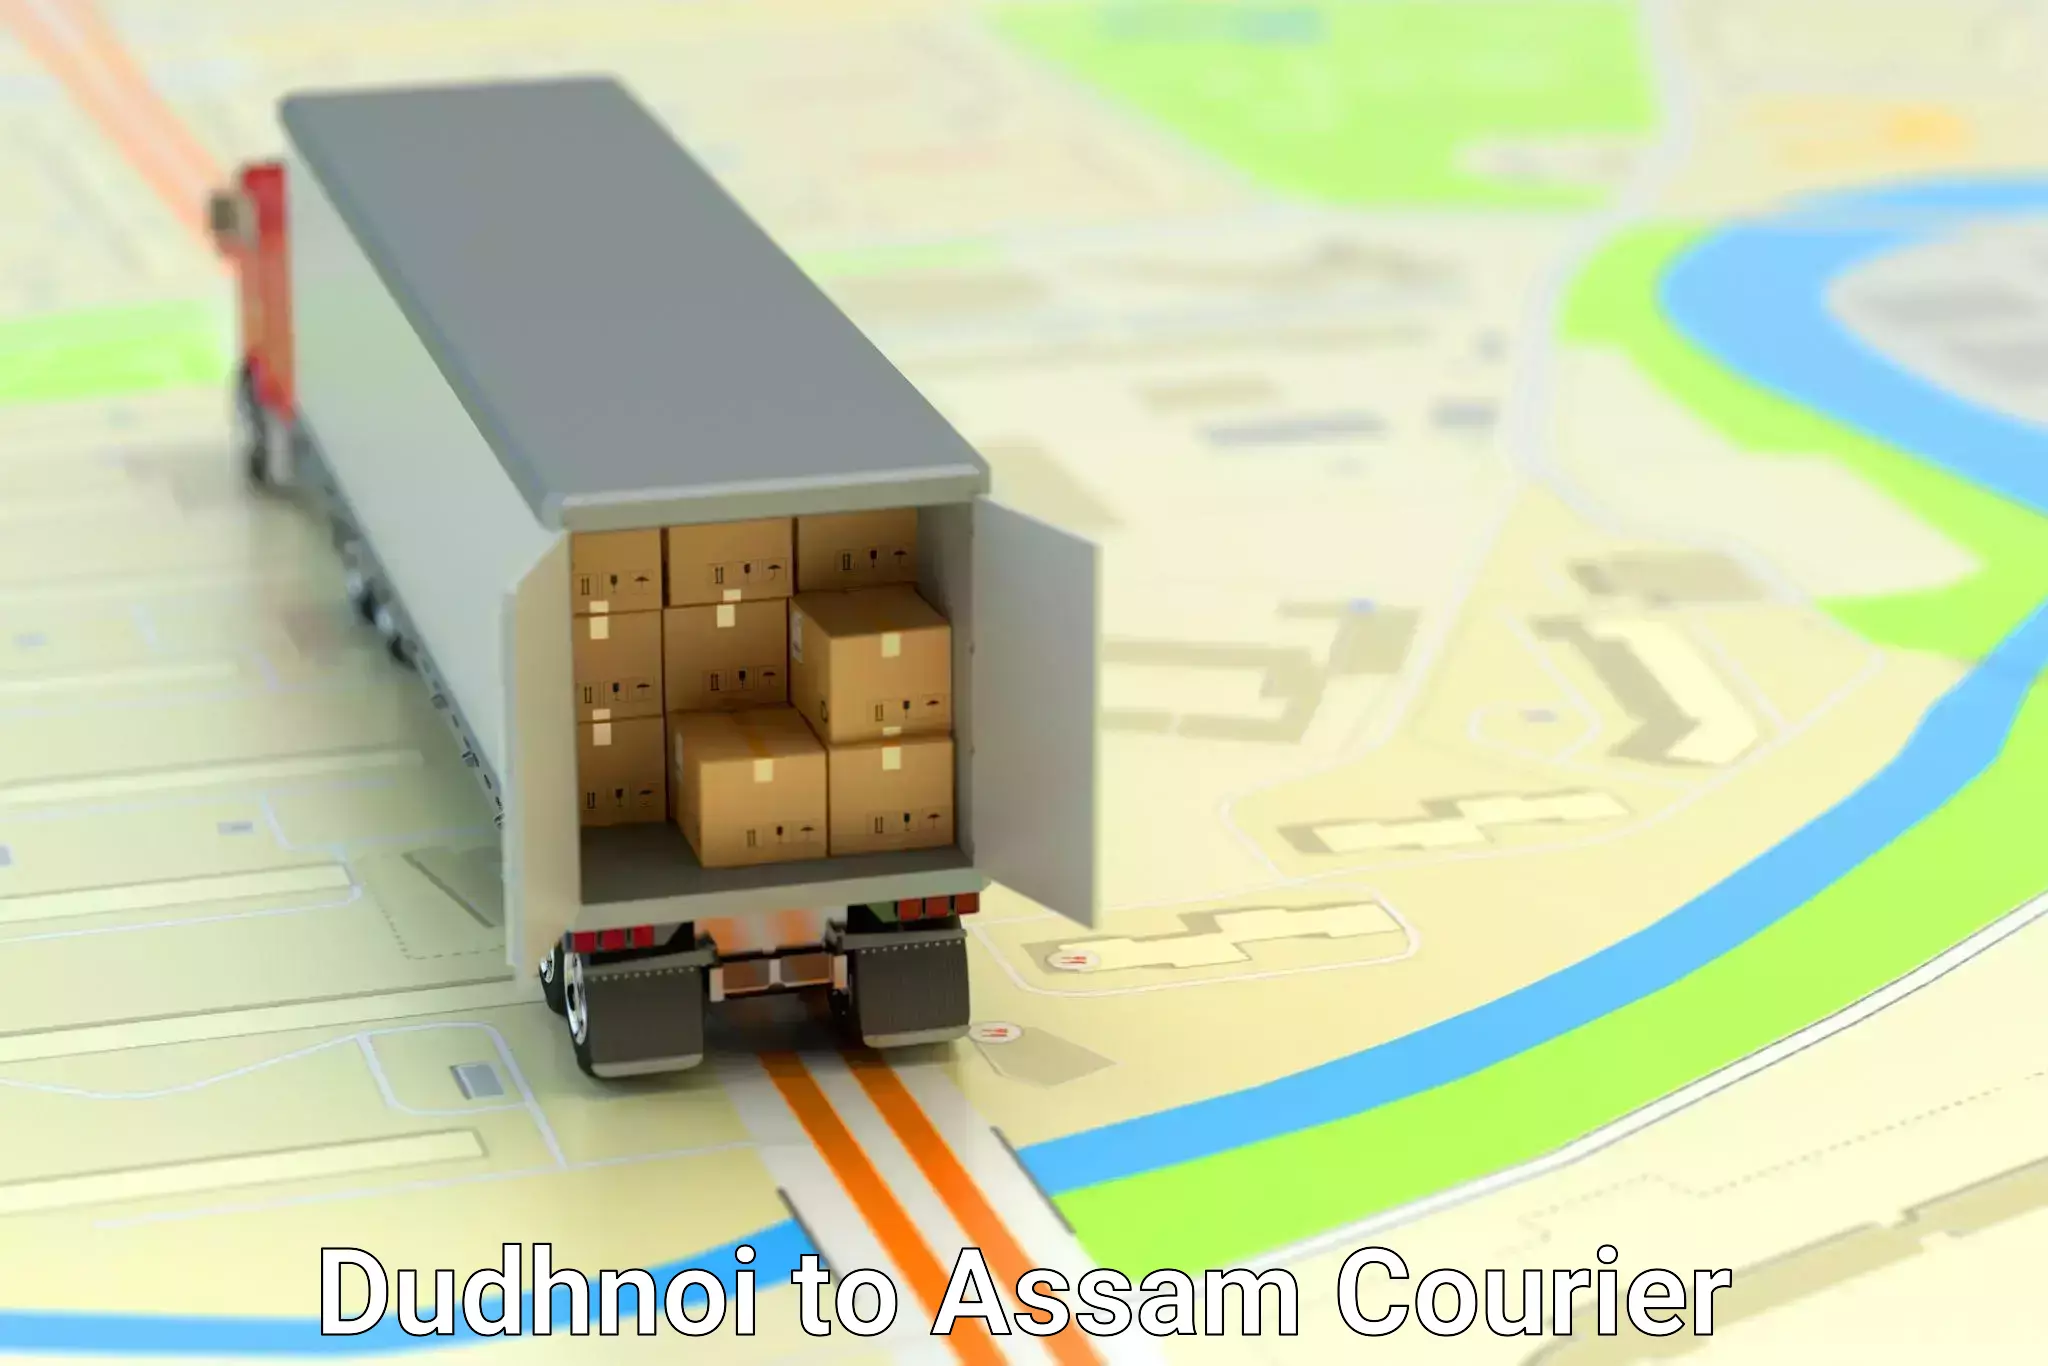 High-efficiency logistics Dudhnoi to Morigaon